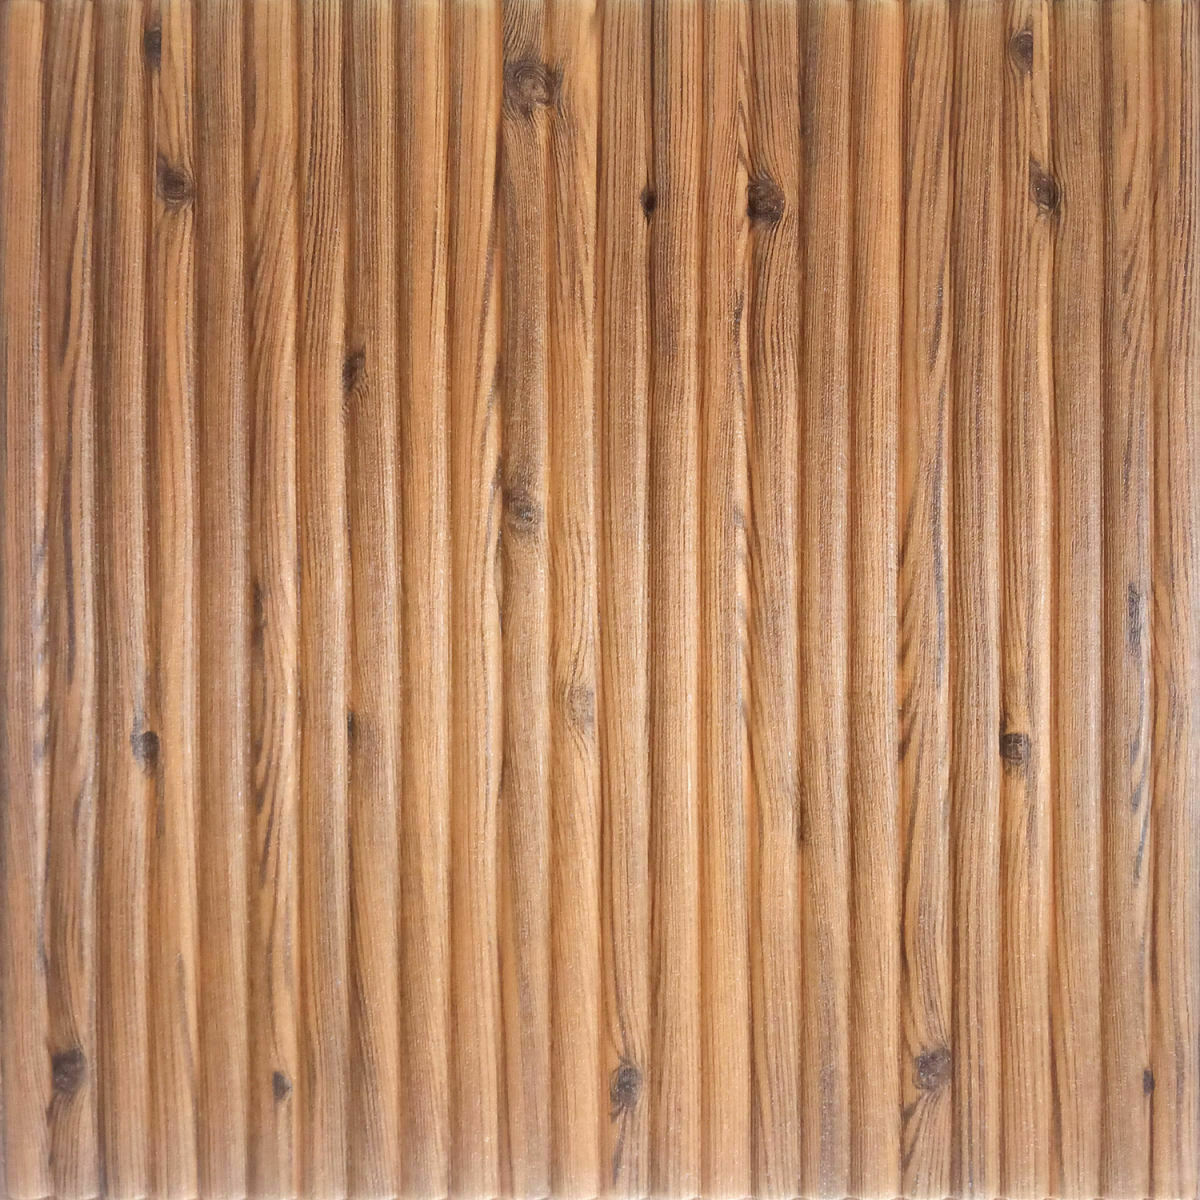 Decorative 3D Foam Wallpaper Panels Bamboo Wood 10PCS